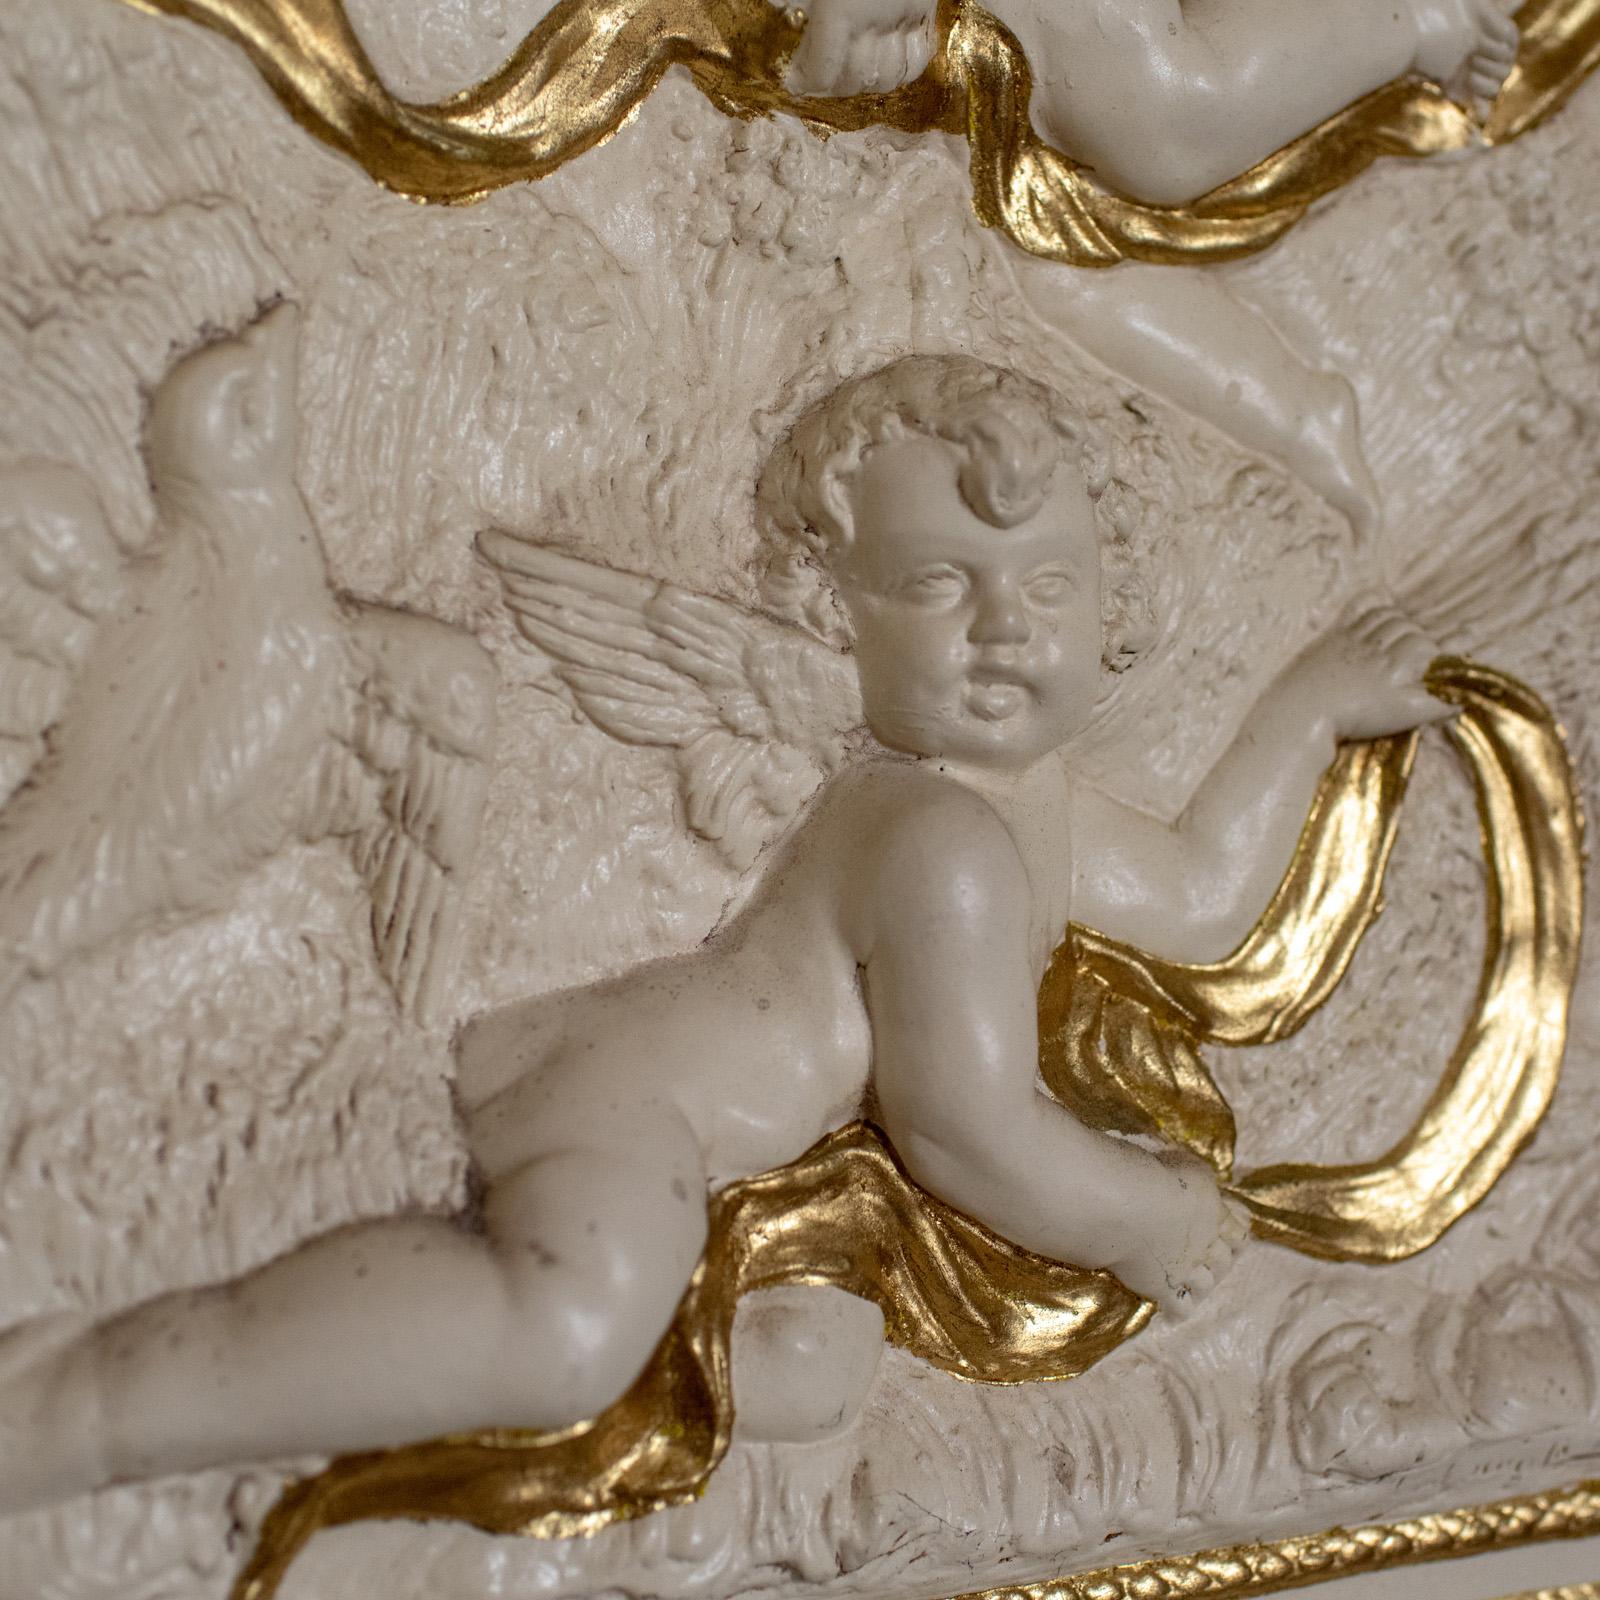 English Pair of Decorative Panels, Plaster Reliefs, Putti, Cherubs, Plaques